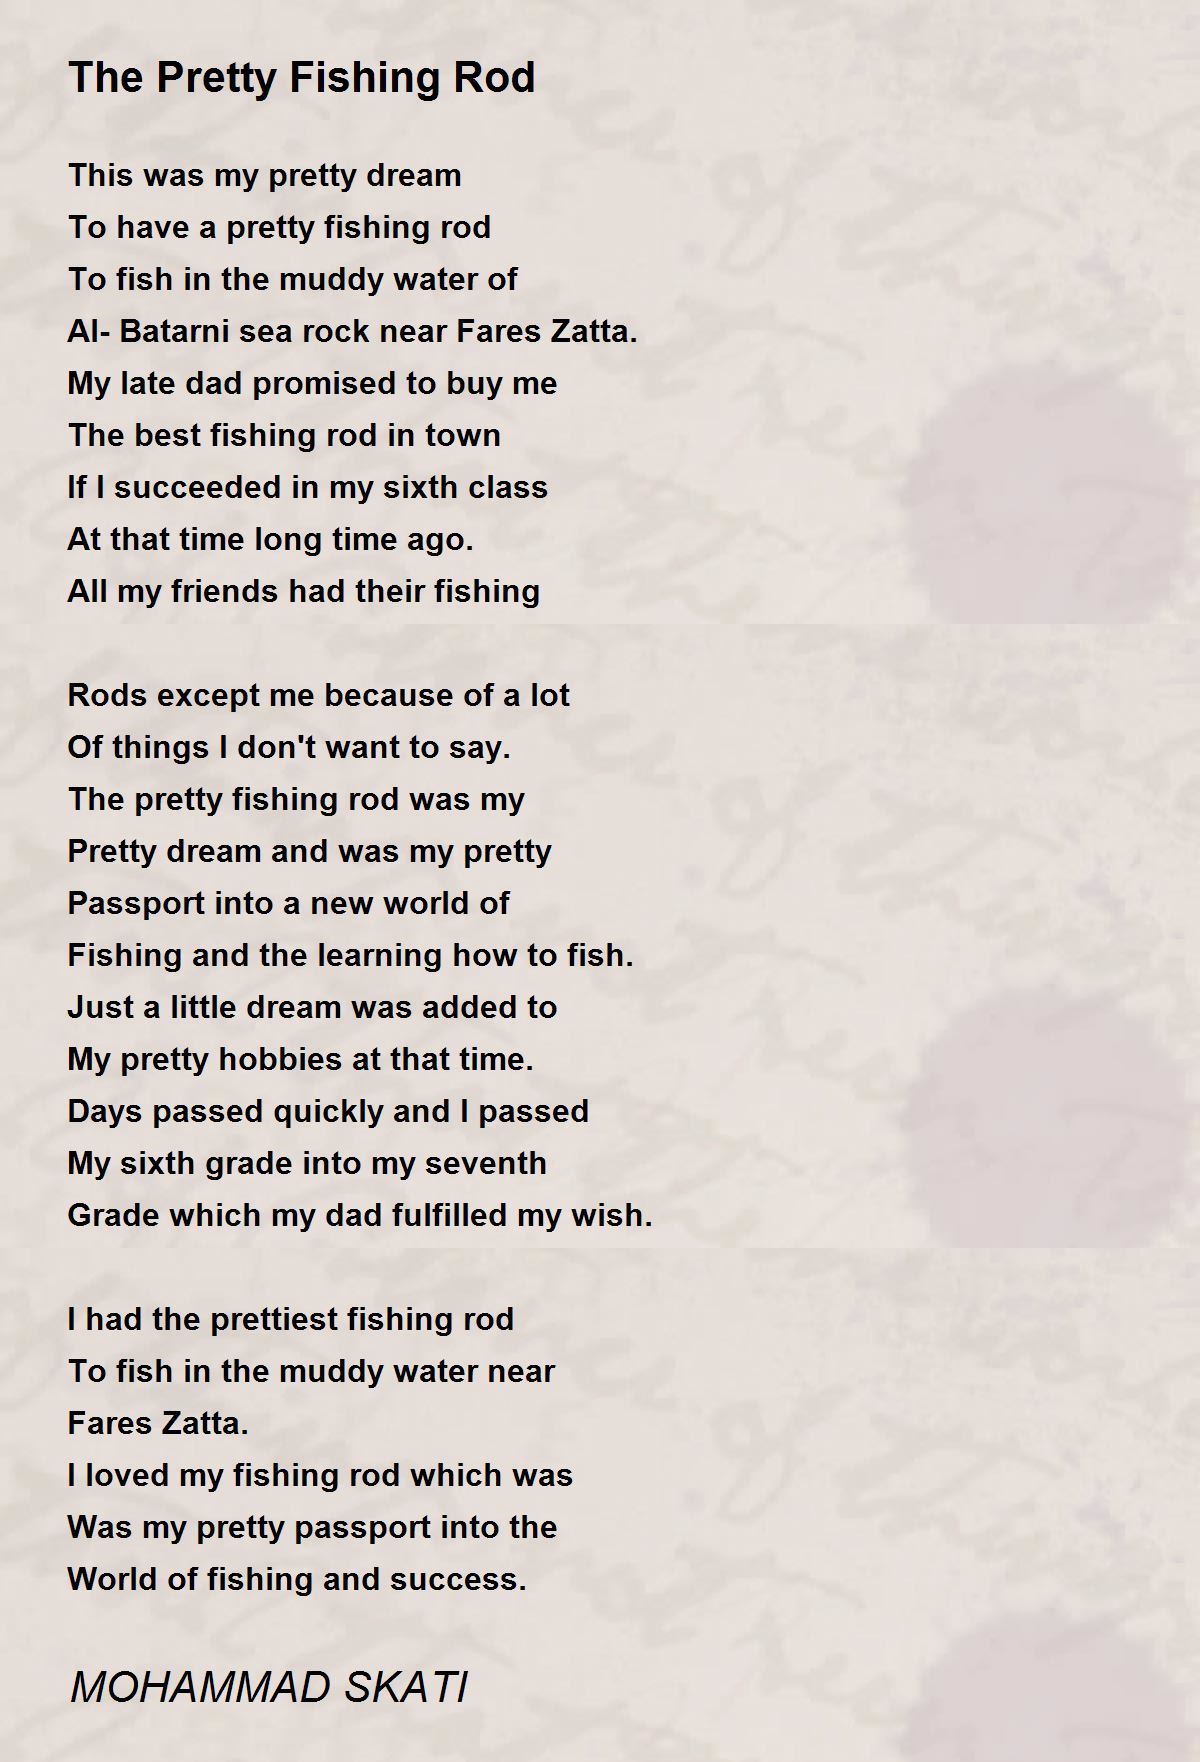 The Pretty Fishing Rod - The Pretty Fishing Rod Poem by MOHAMMAD SKATI